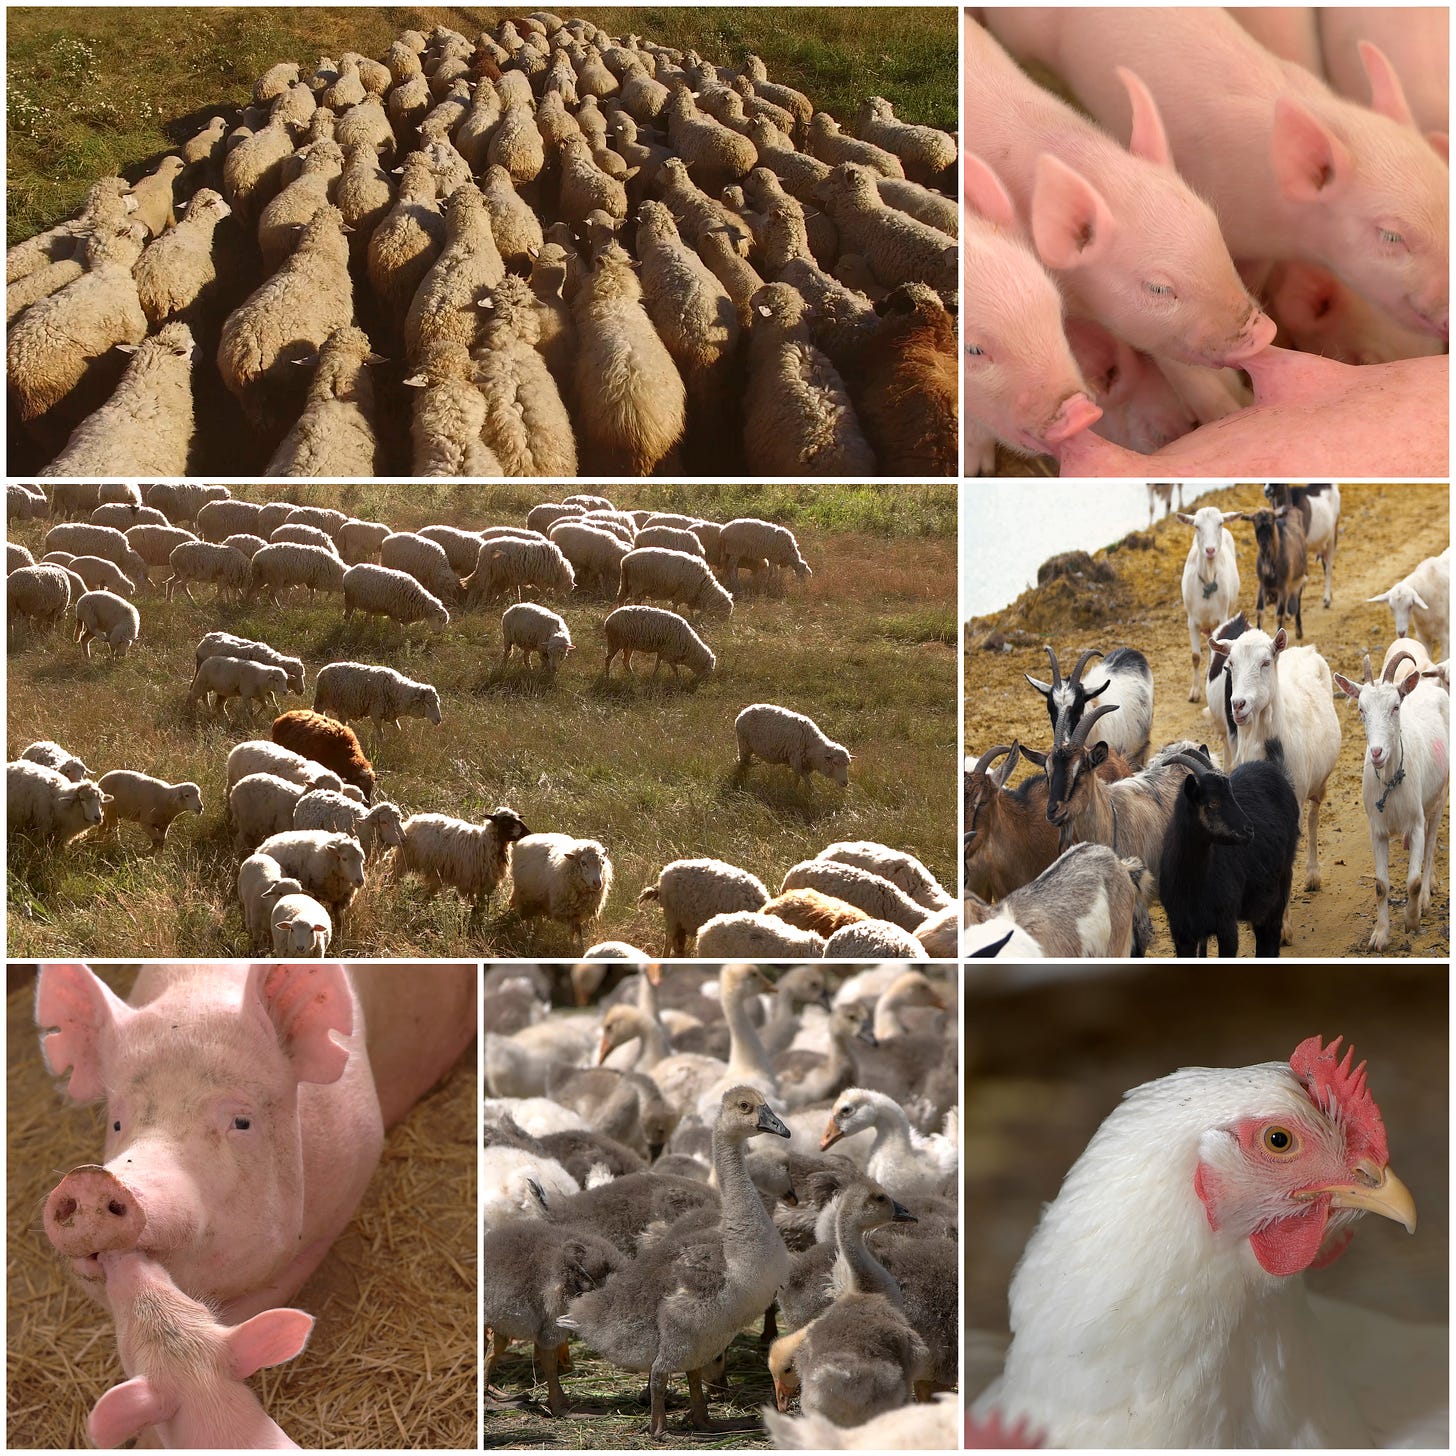 Livestock production